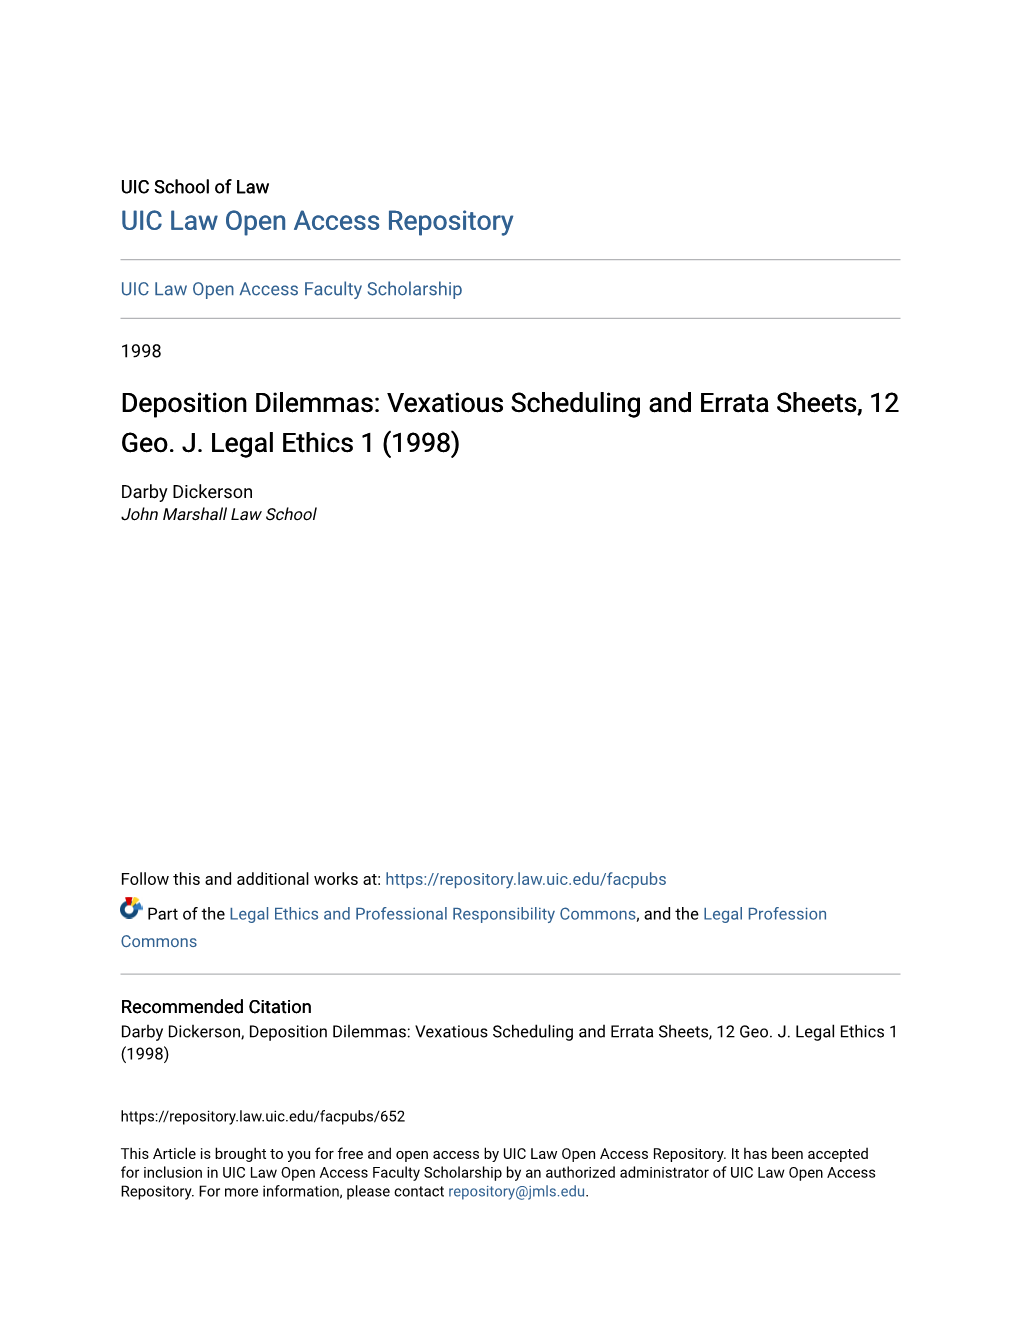 Deposition Dilemmas: Vexatious Scheduling and Errata Sheets, 12 Geo. J. Legal Ethics 1 (1998)